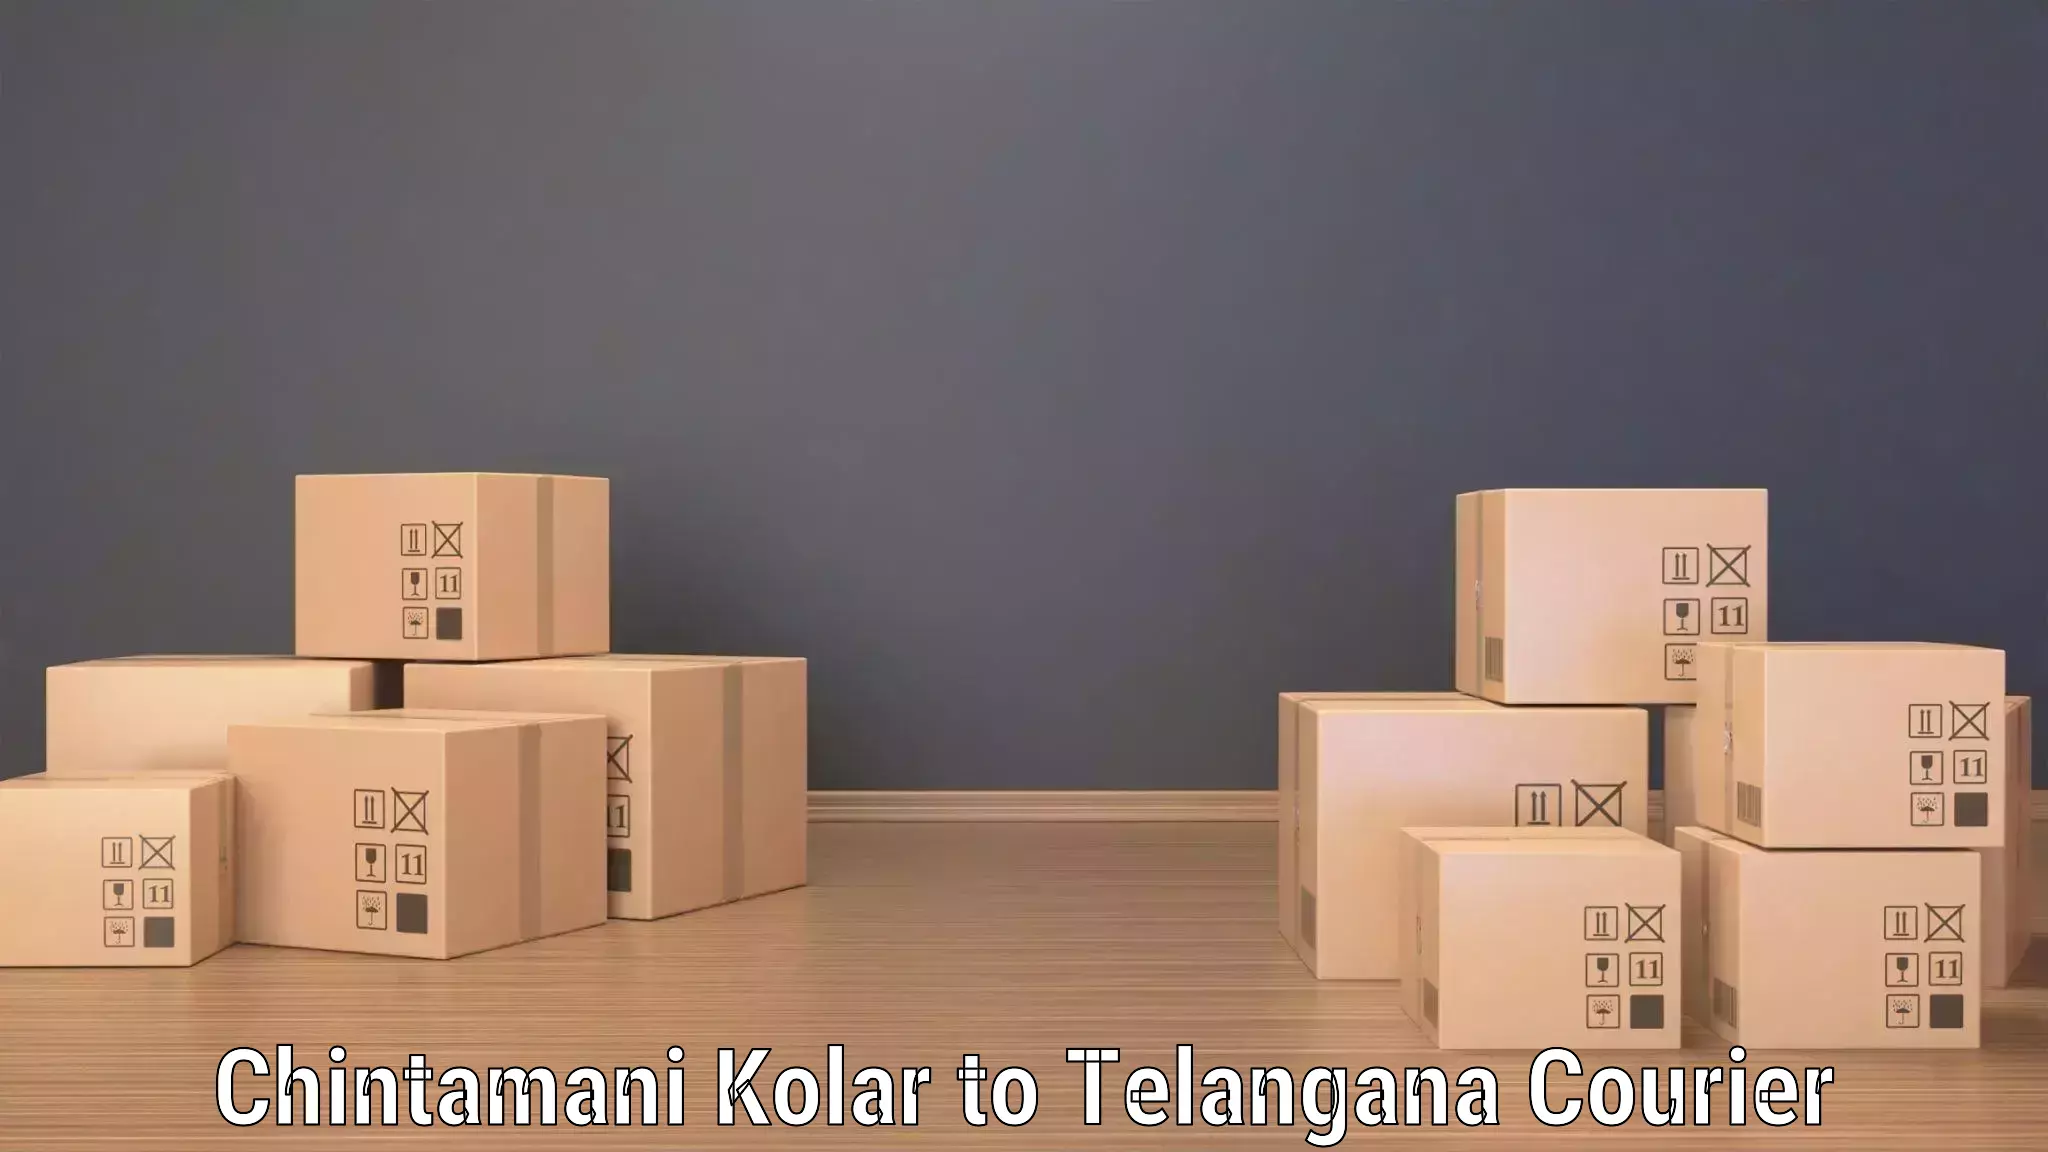 Nationwide shipping capabilities Chintamani Kolar to Yellandu